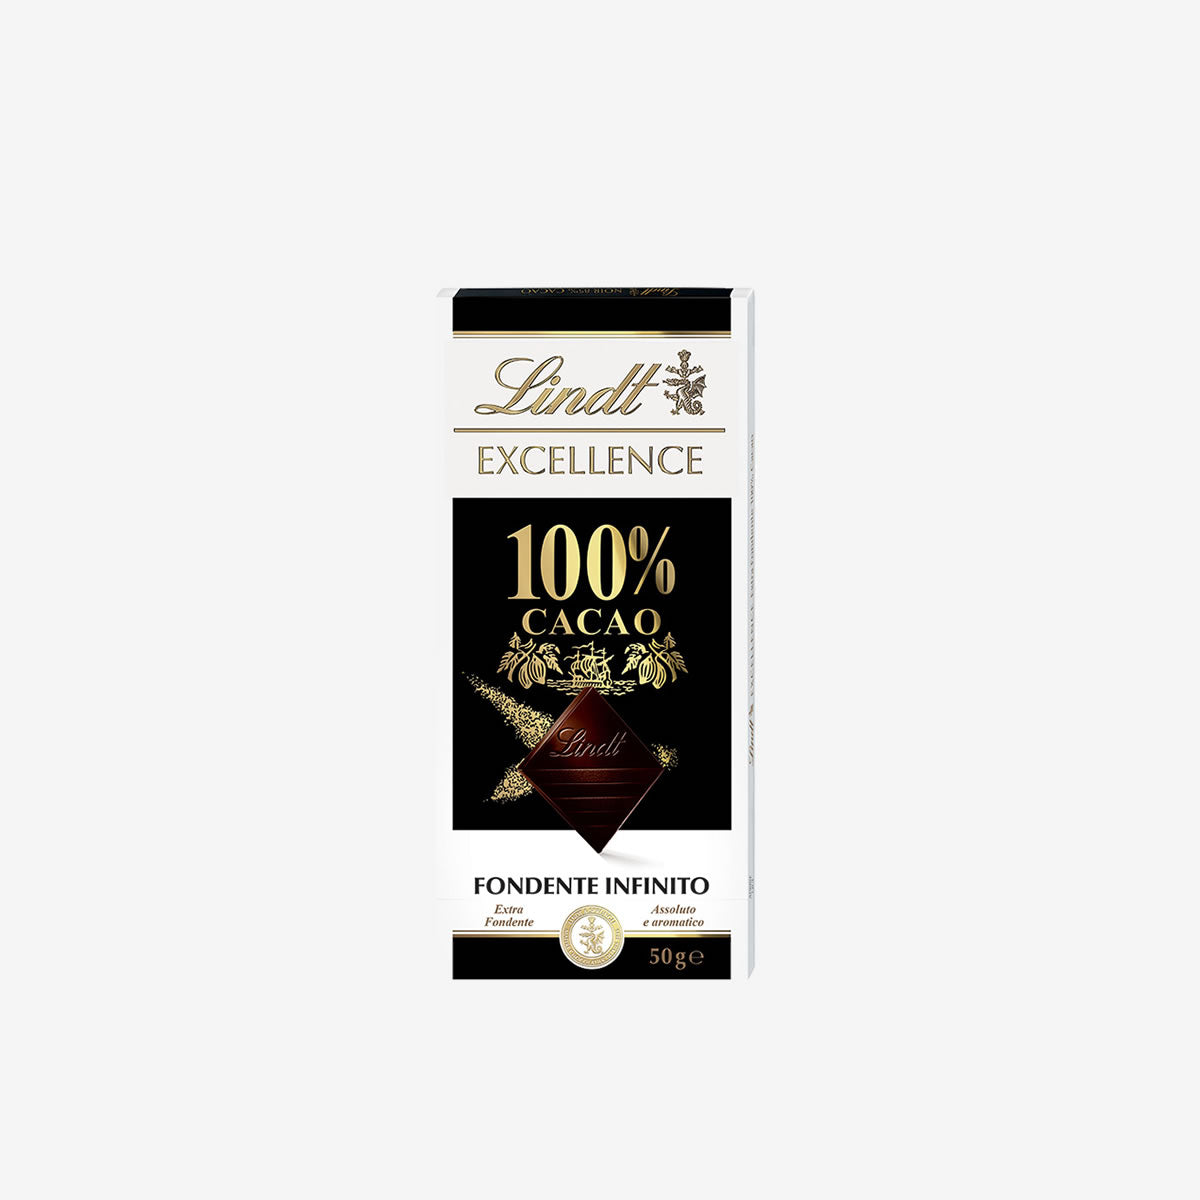 Tavoletta Excellence 100% Cacao